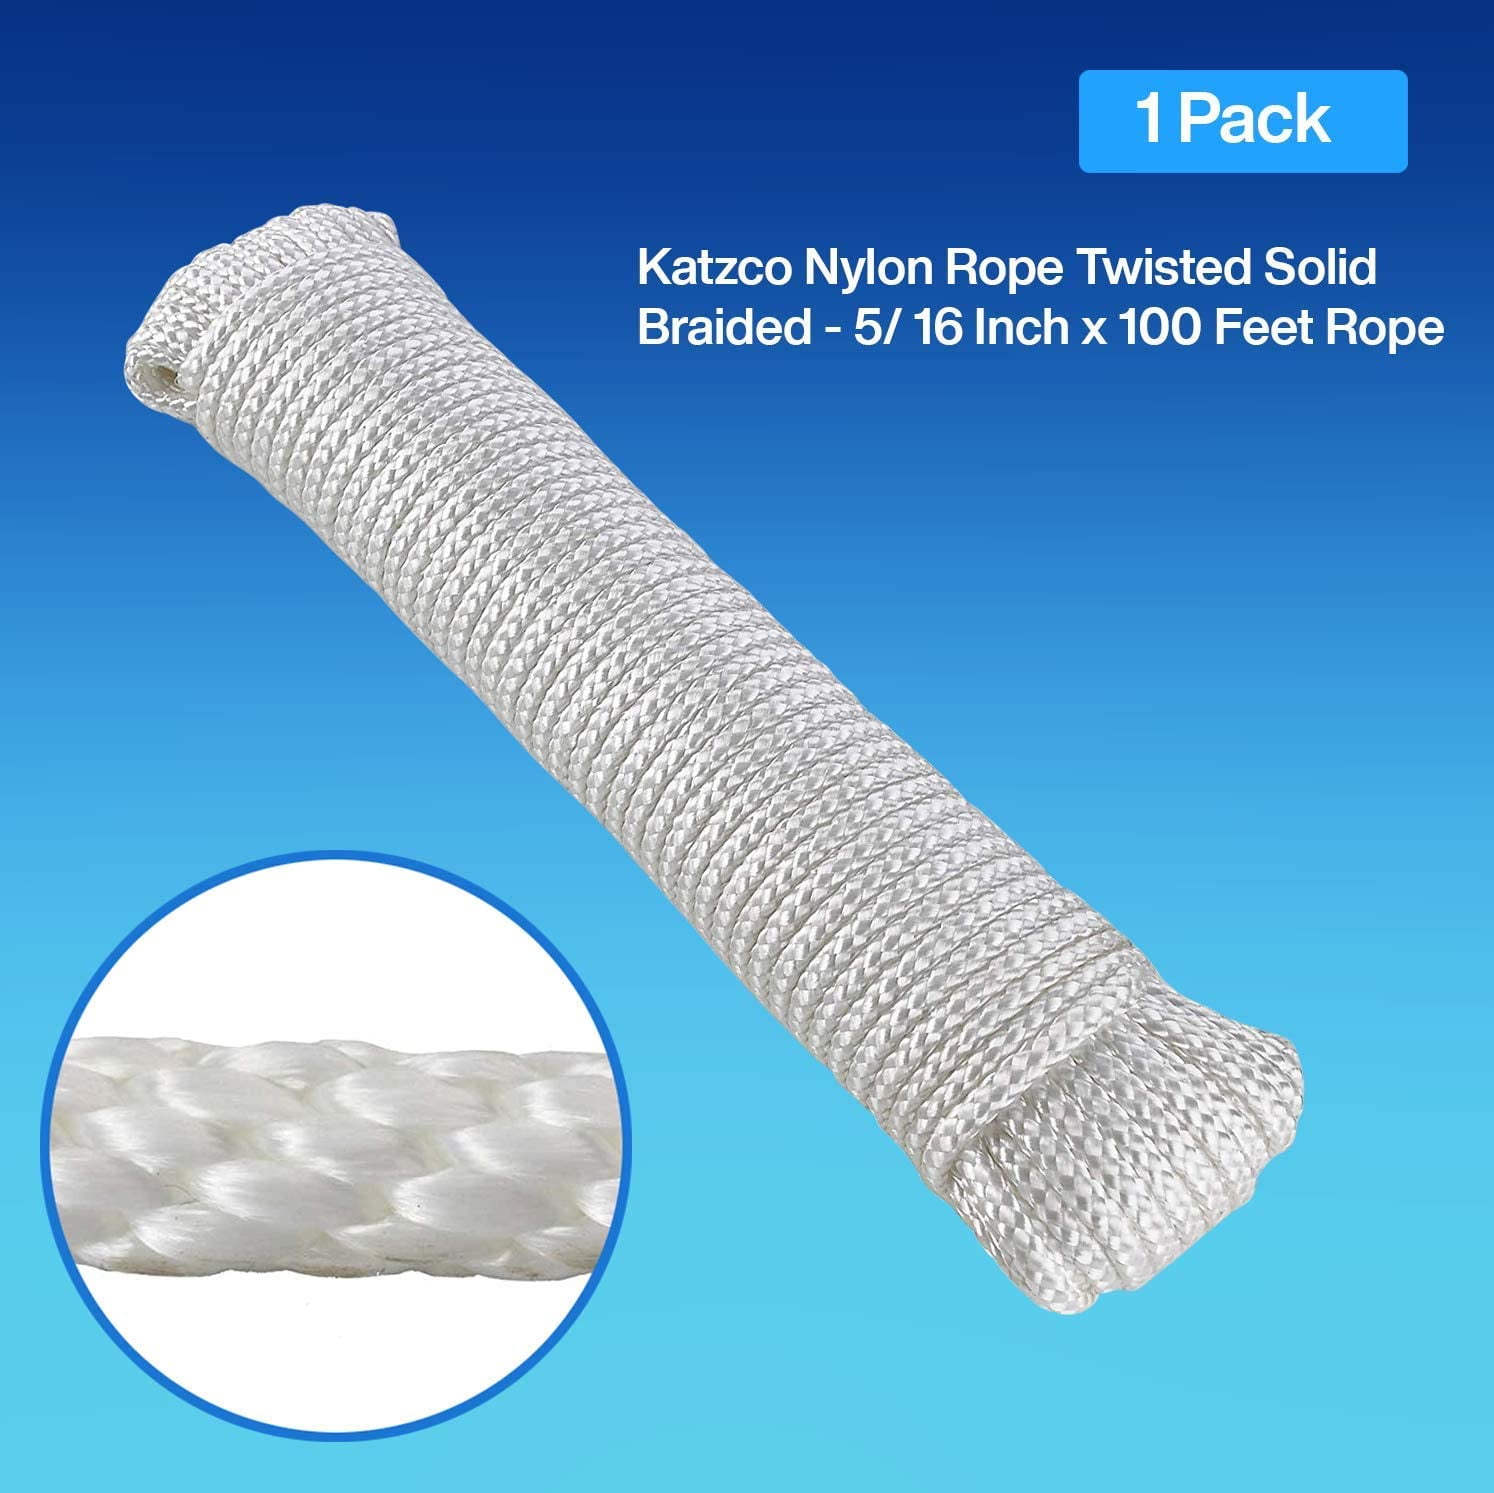 Katzco Nylon Braided Rope - 5/16 inch x 100 Foot Anchor Rope - White